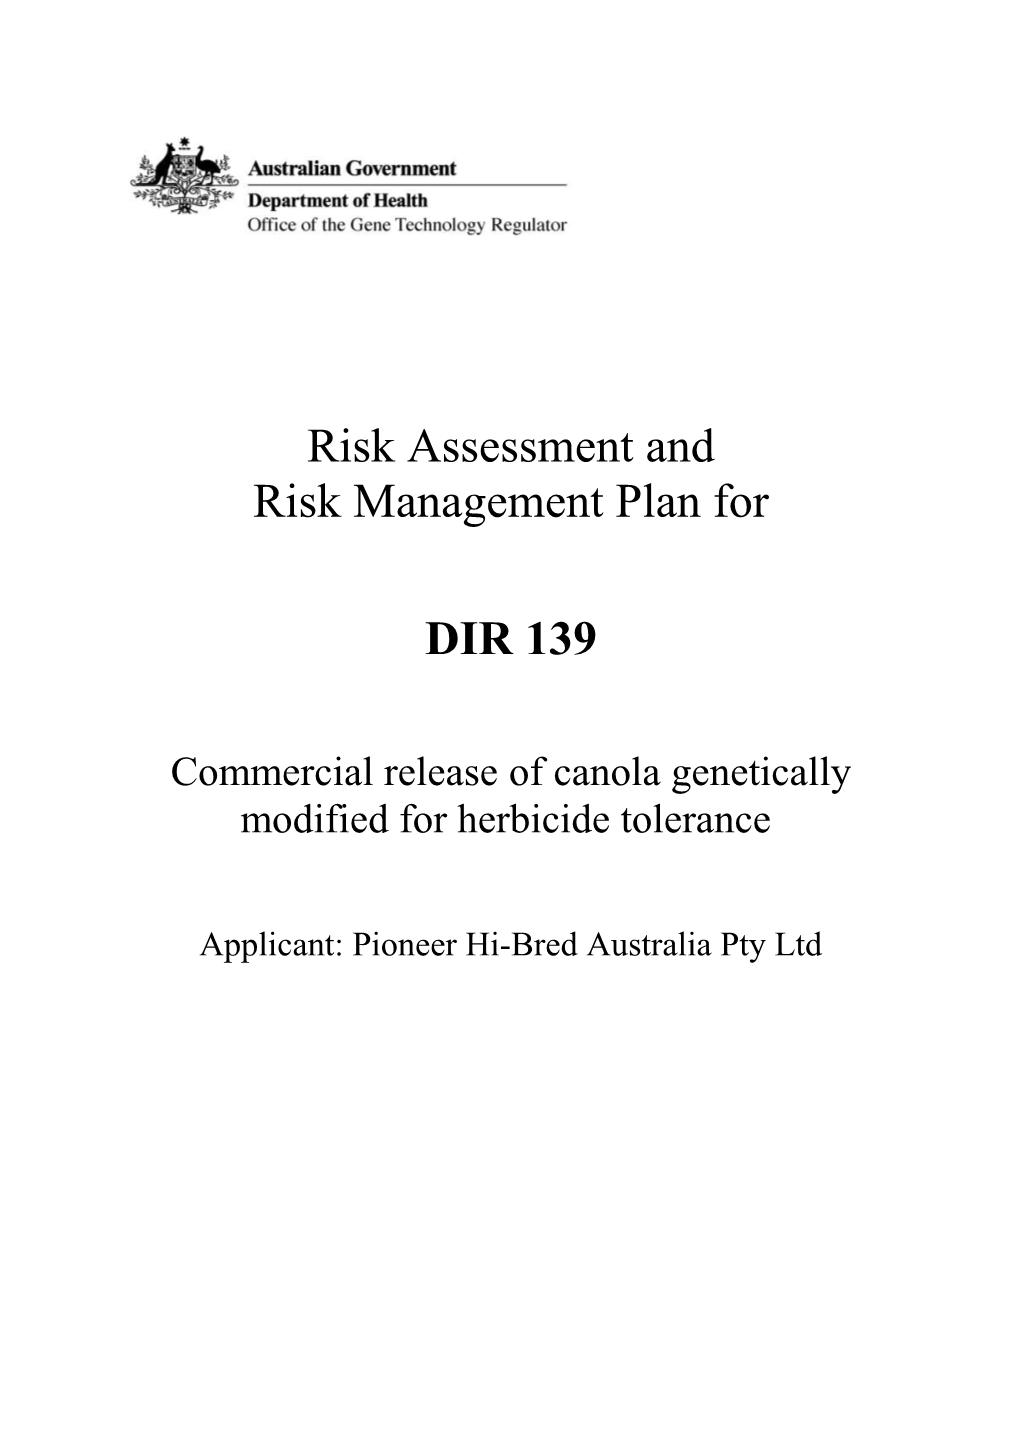 DIR 139 - Risk Assessment and Risk Management Plan